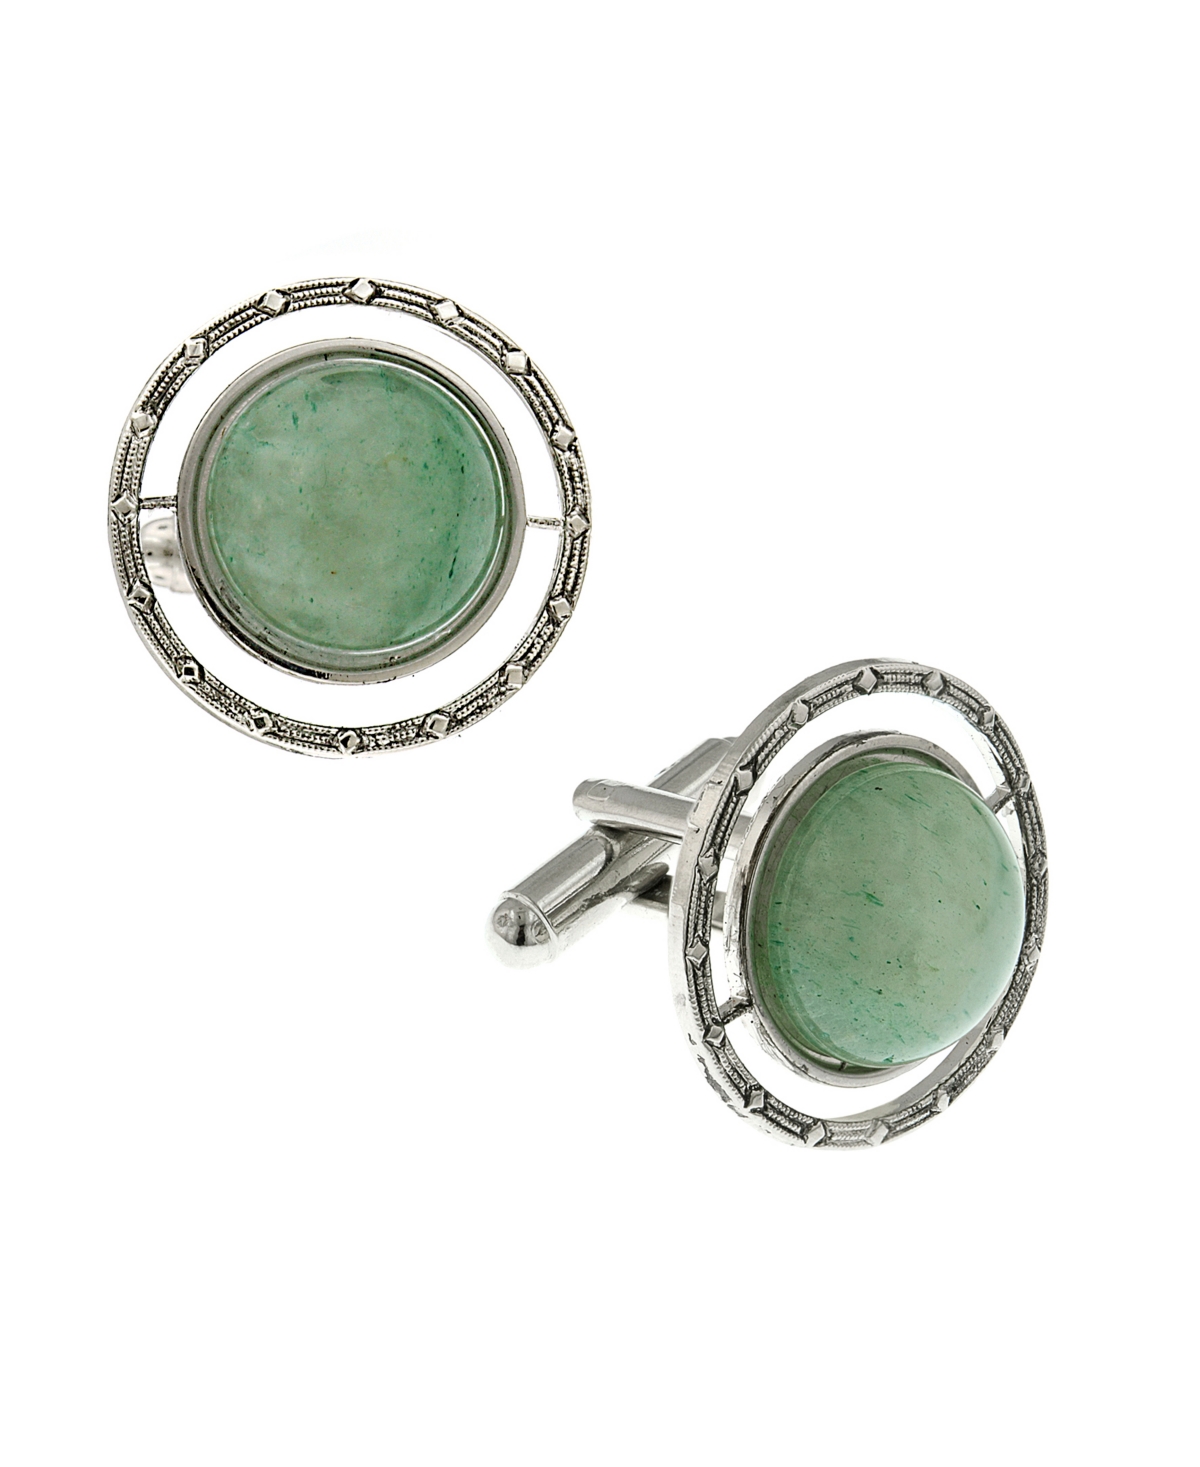 1928 Jewelry Silver-tone Semi-precious Jade Round Cufflinks In Green